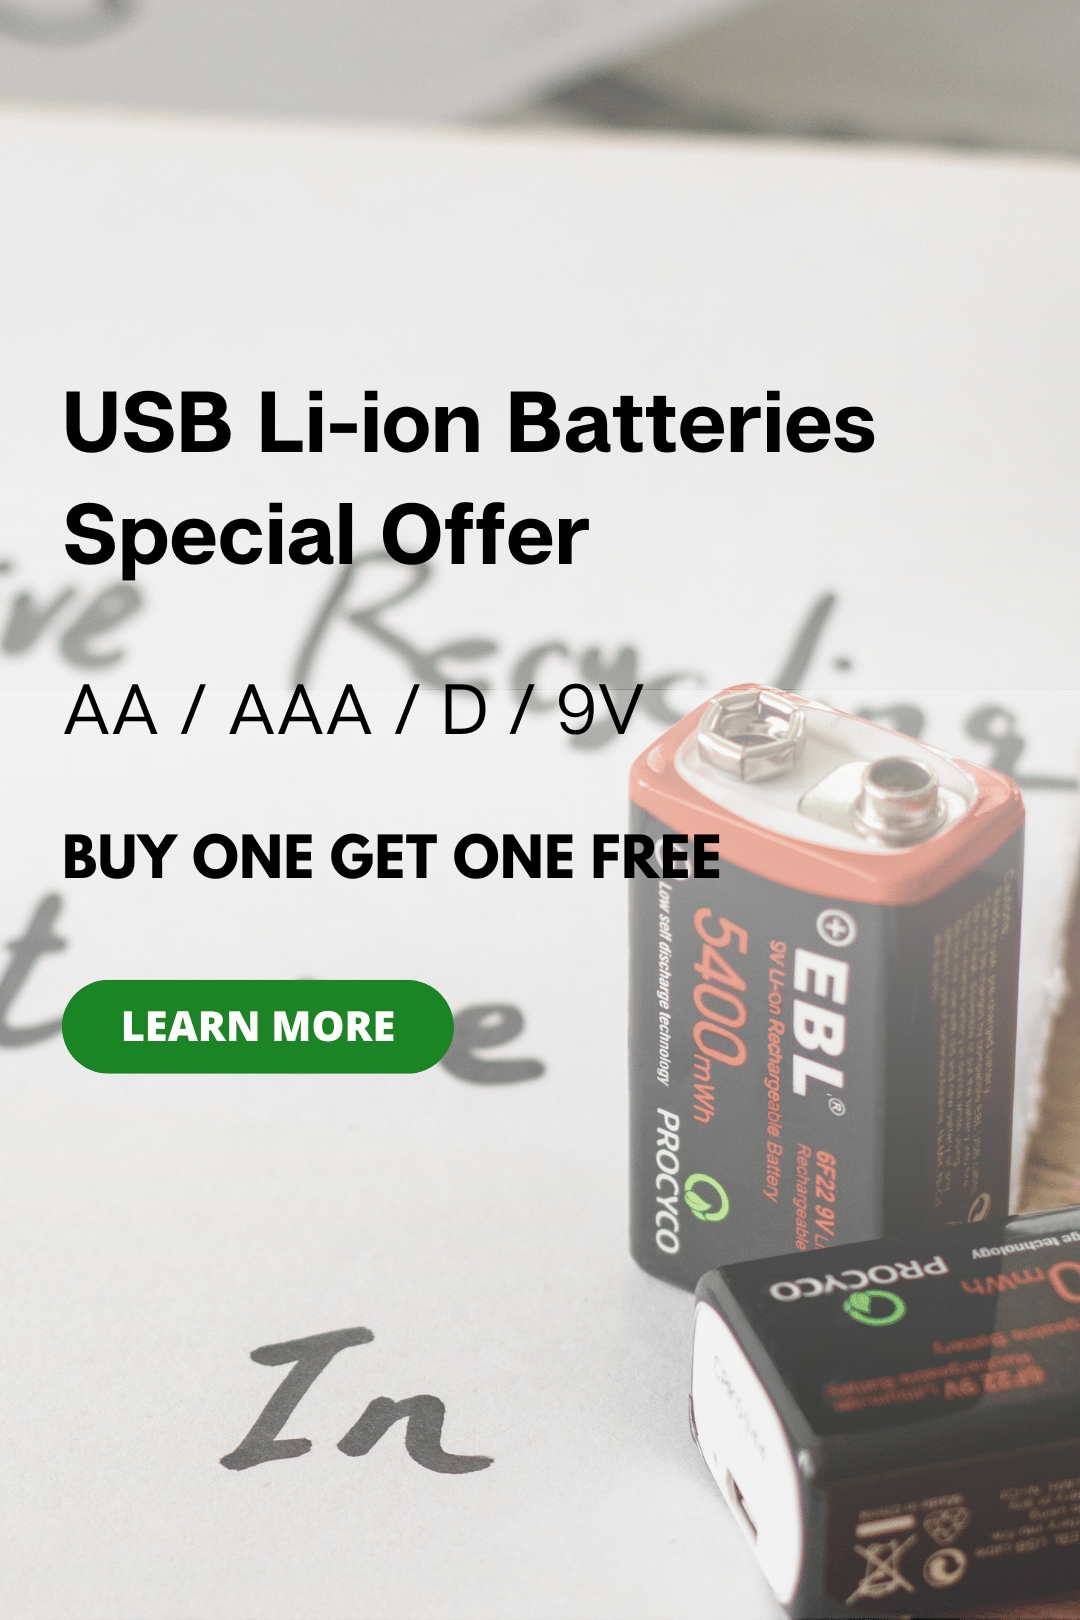 USB Li-ion Batteries Special Offer